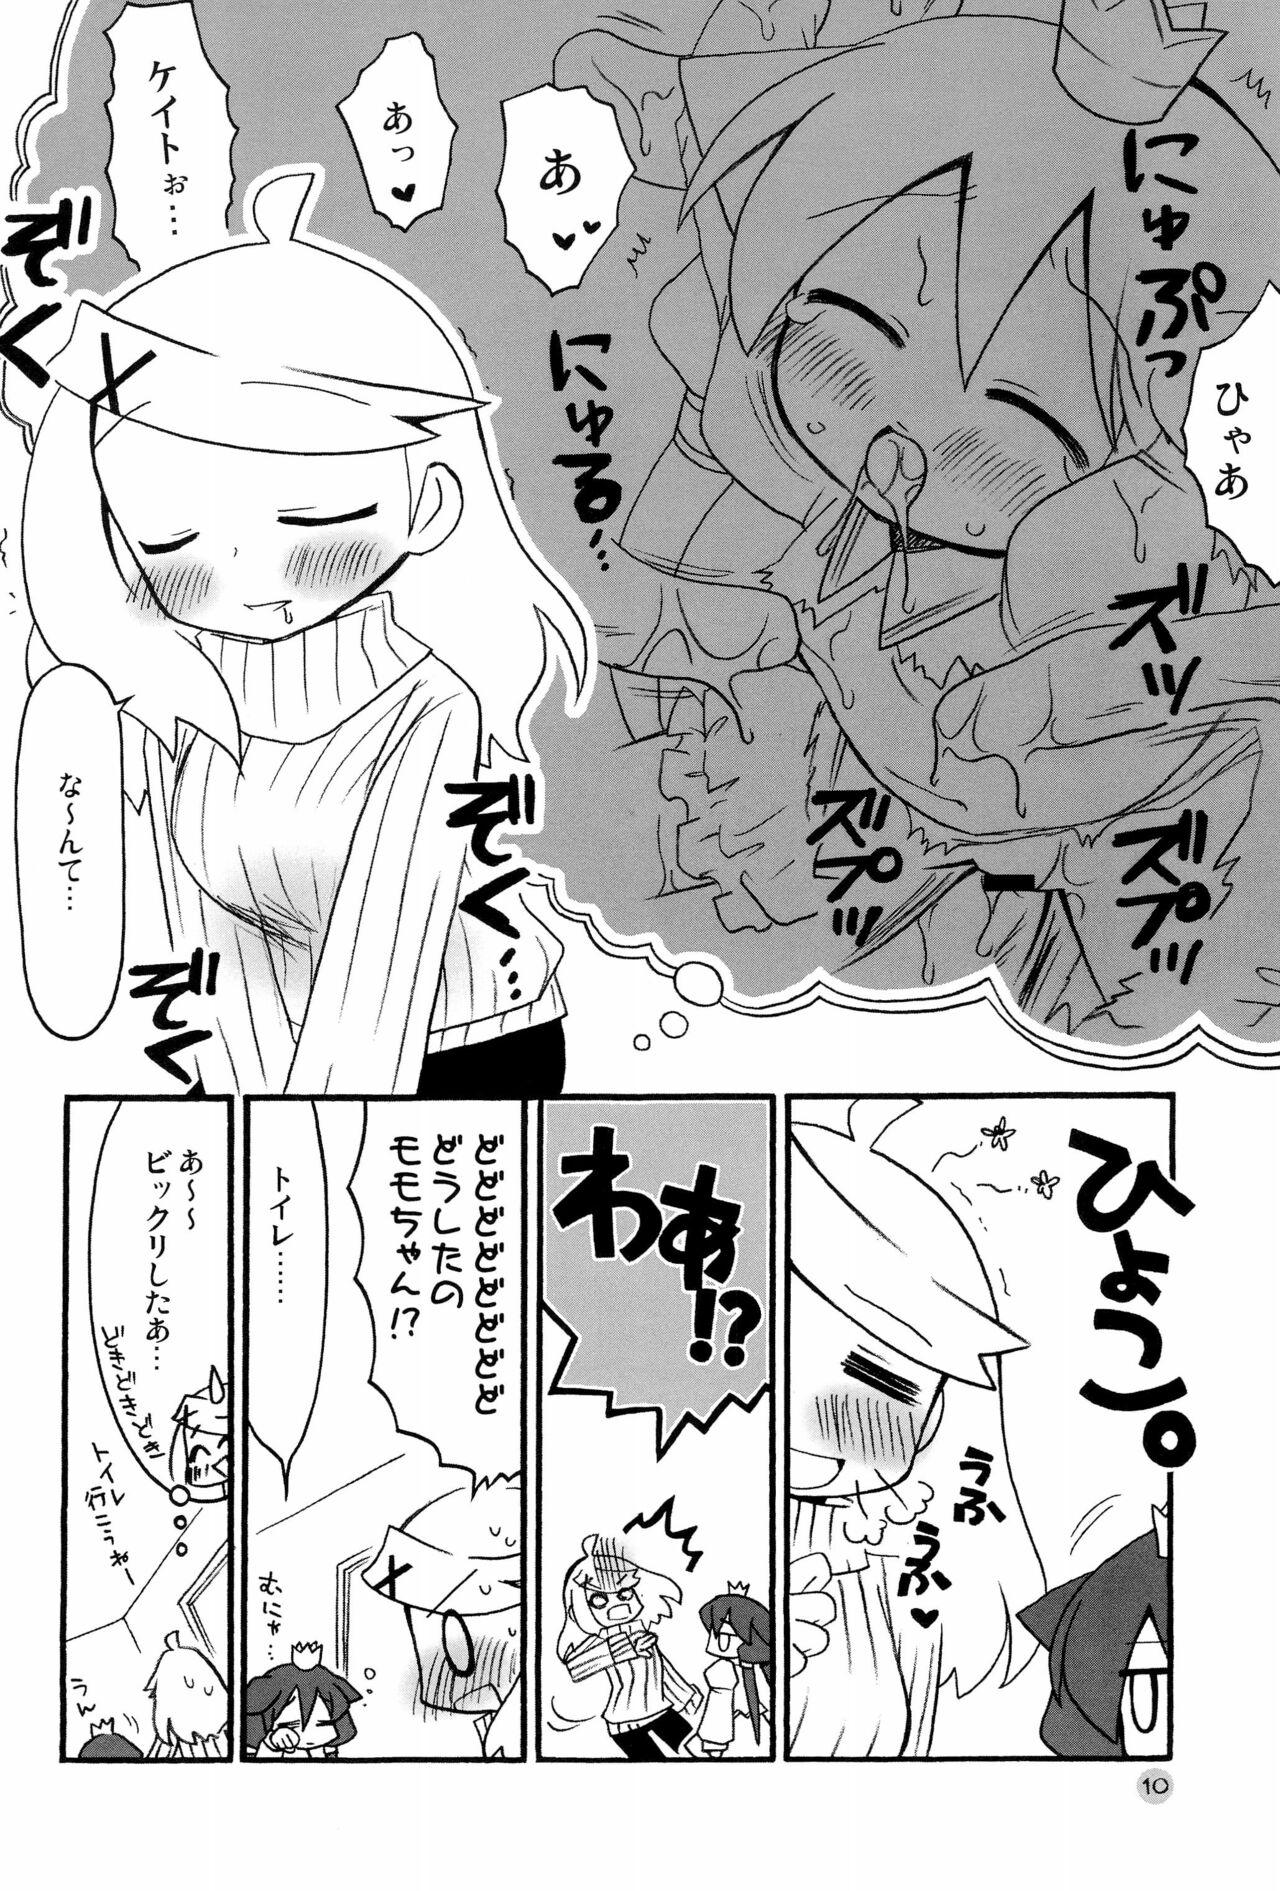 Caliente Harumomo no Tsubomi - 7th dragon Spank - Page 10